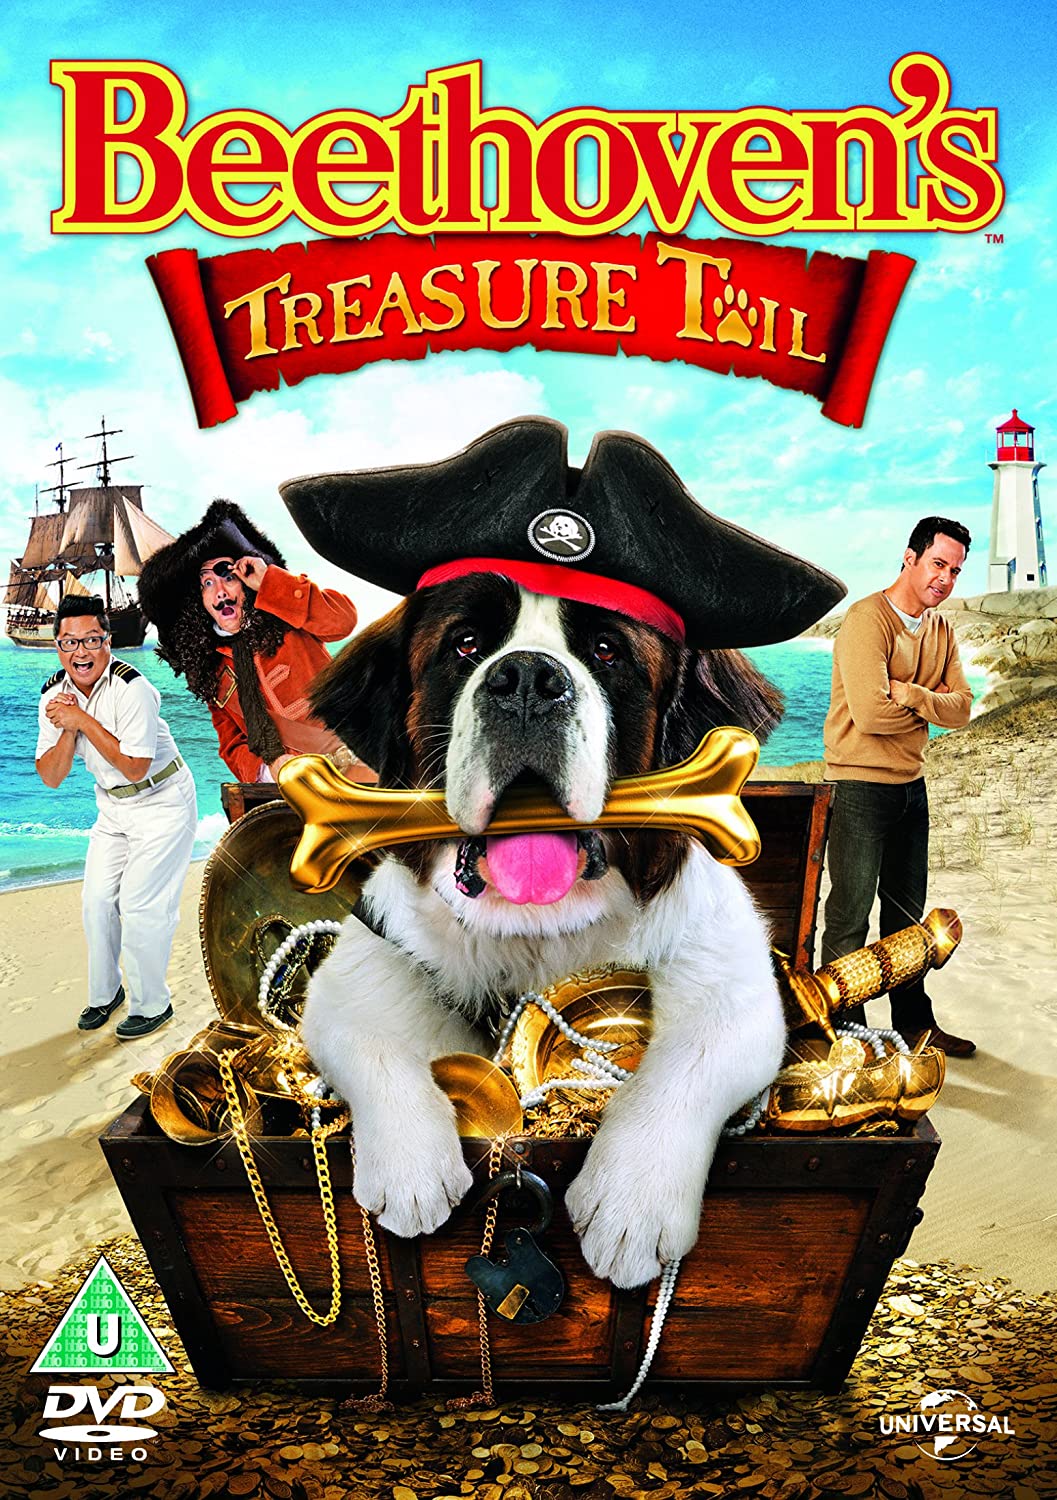 Beethoven's Treasure Tail [Family] [DVD]